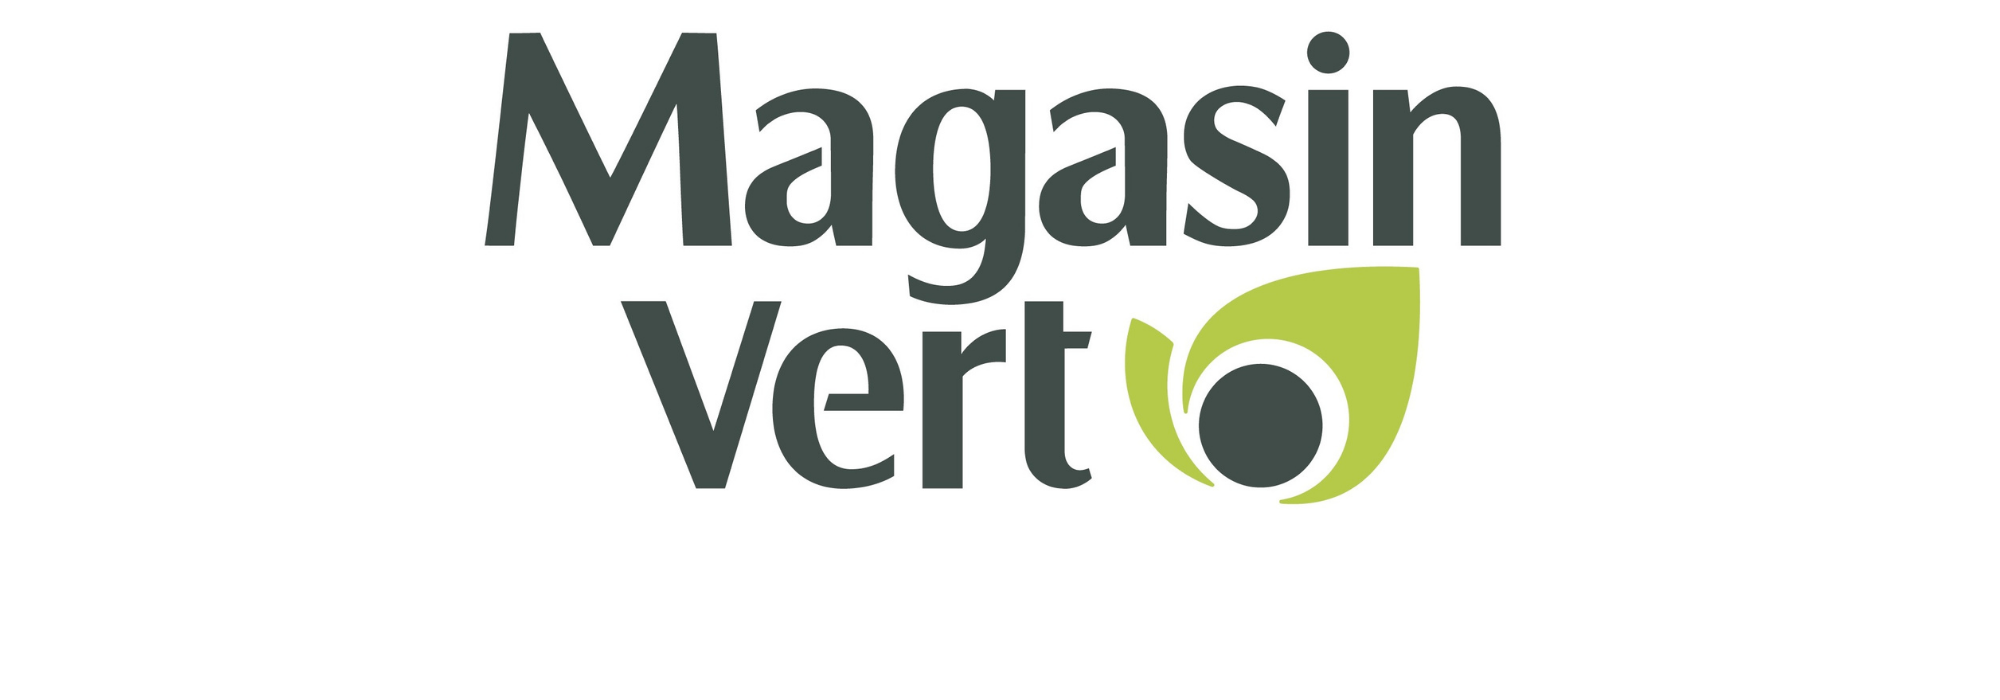 Magasin Vert - ST MARTIN DES CHAMPS - MORLAIX